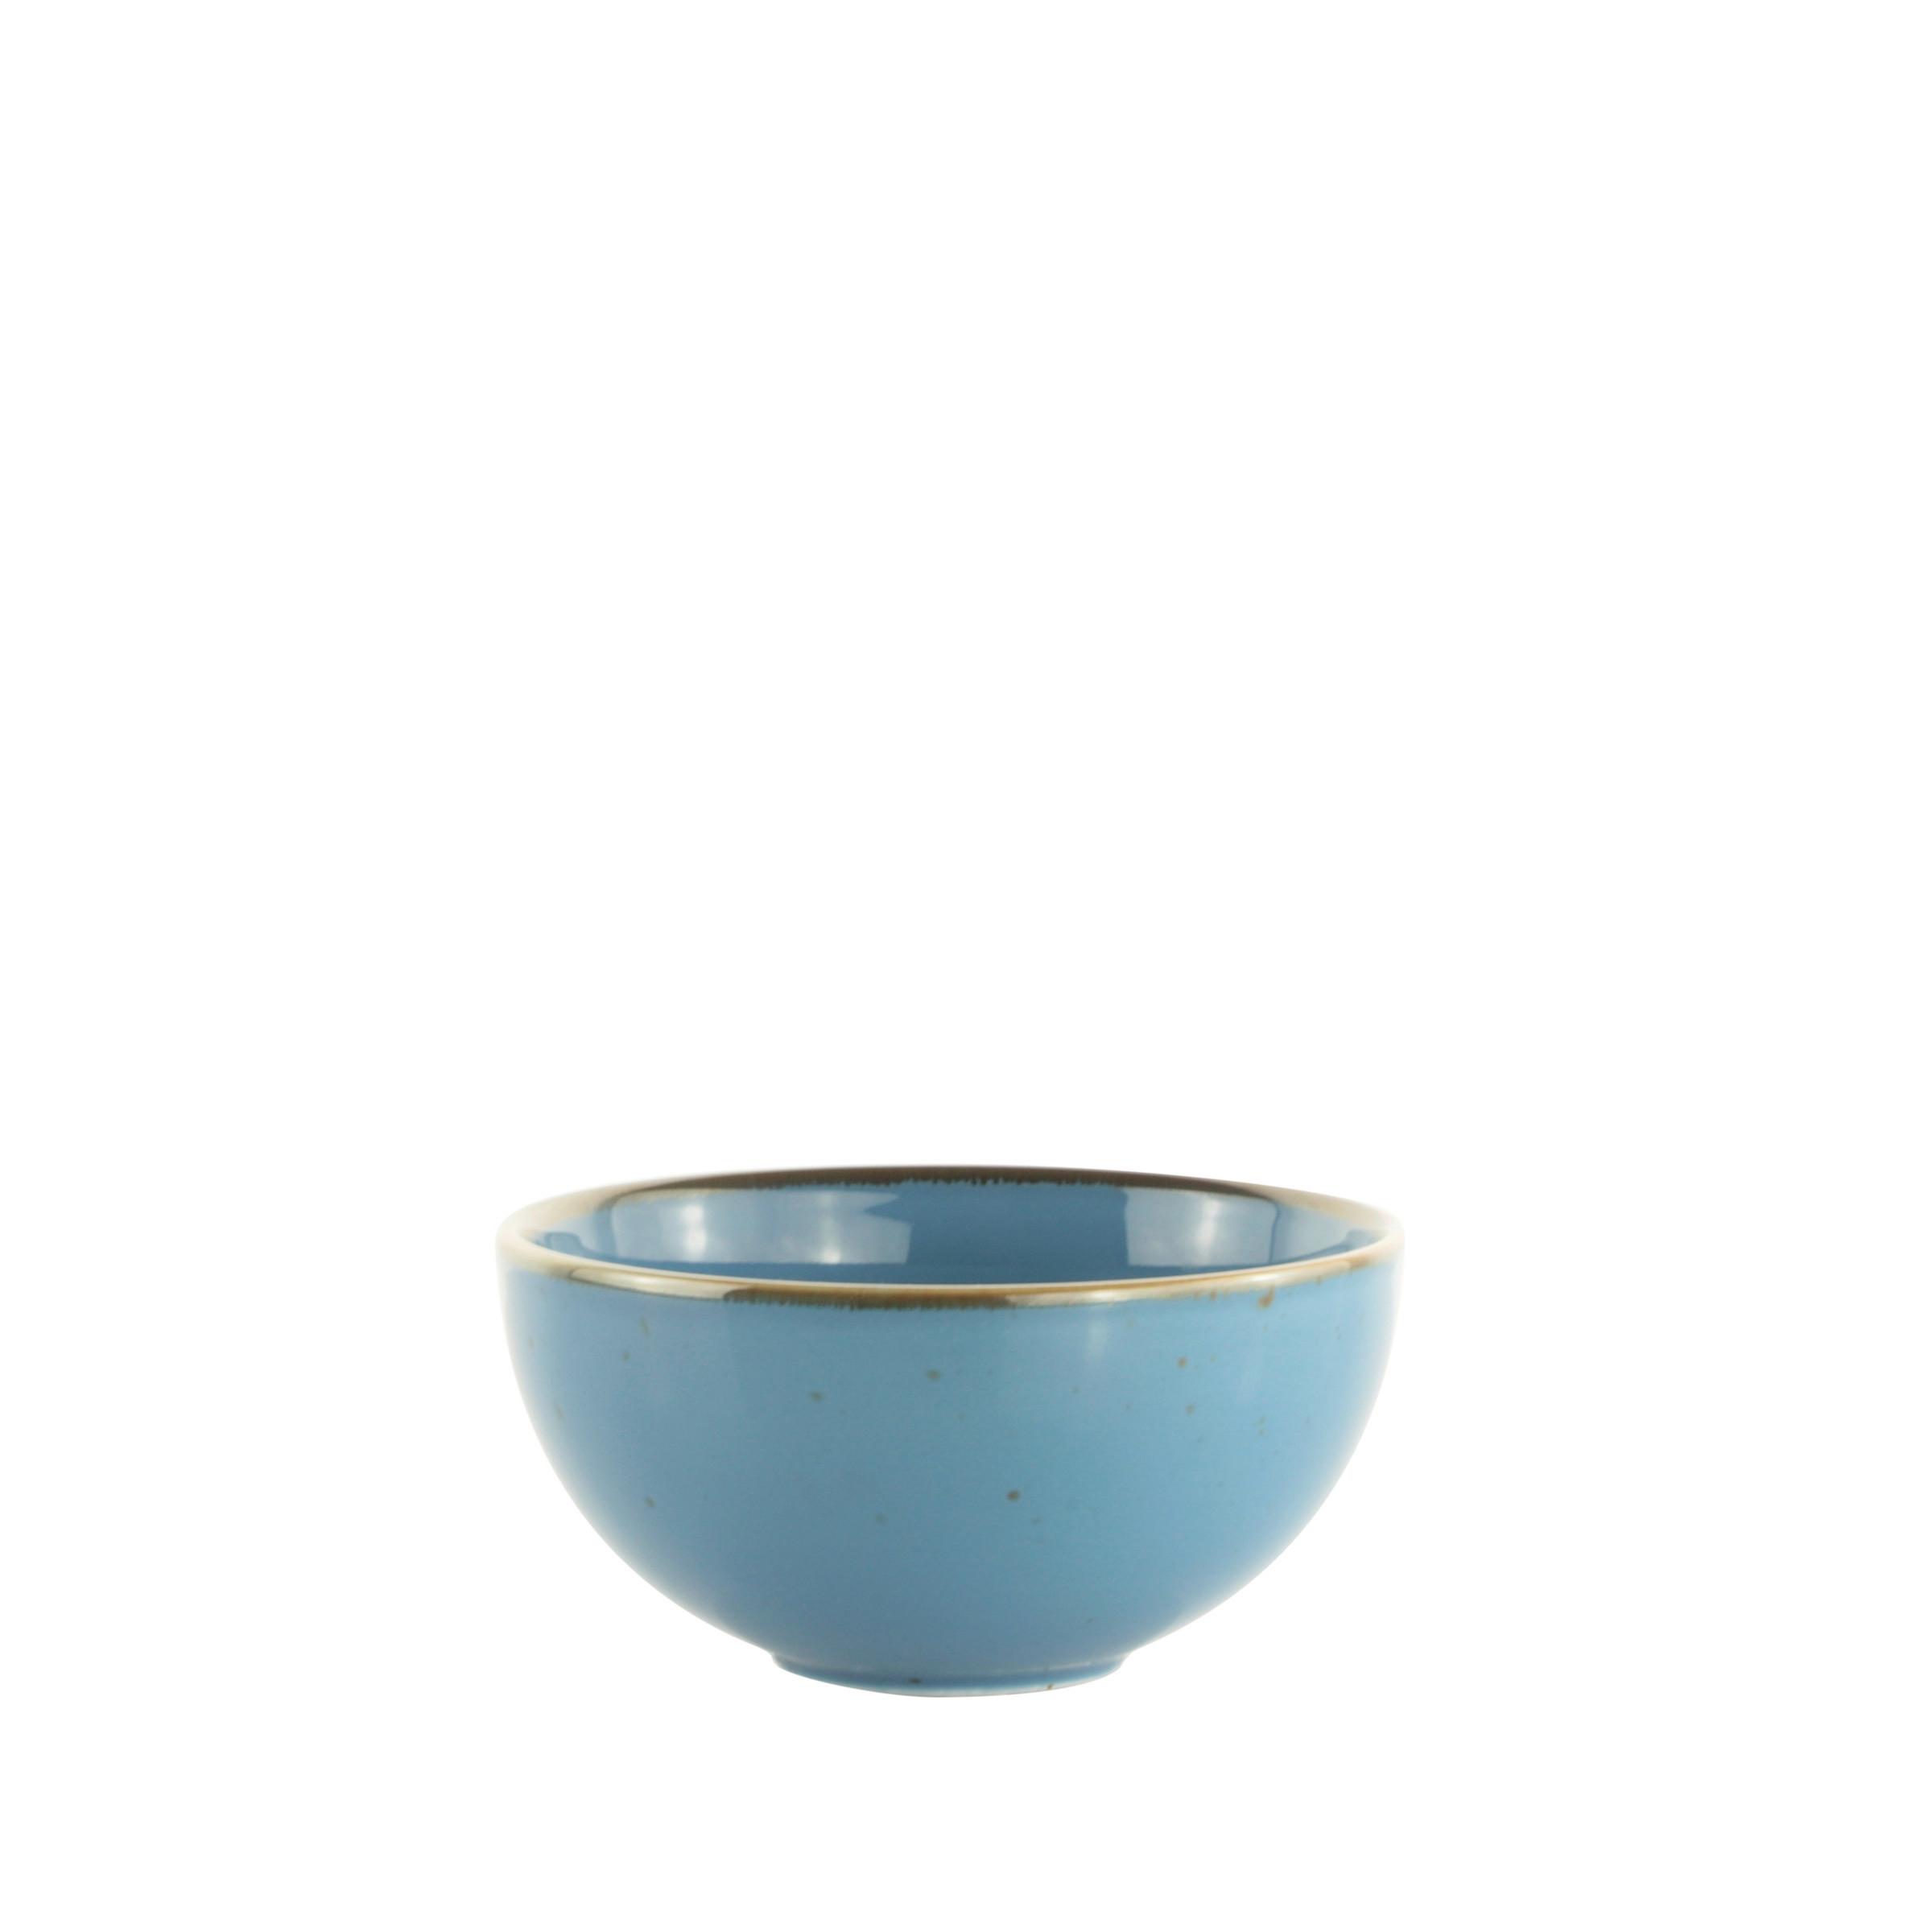 Schale Capri aus Prozellan Ø 11,5cm - Blau, Modern, Keramik (11,5/5,7cm) - Premium Living